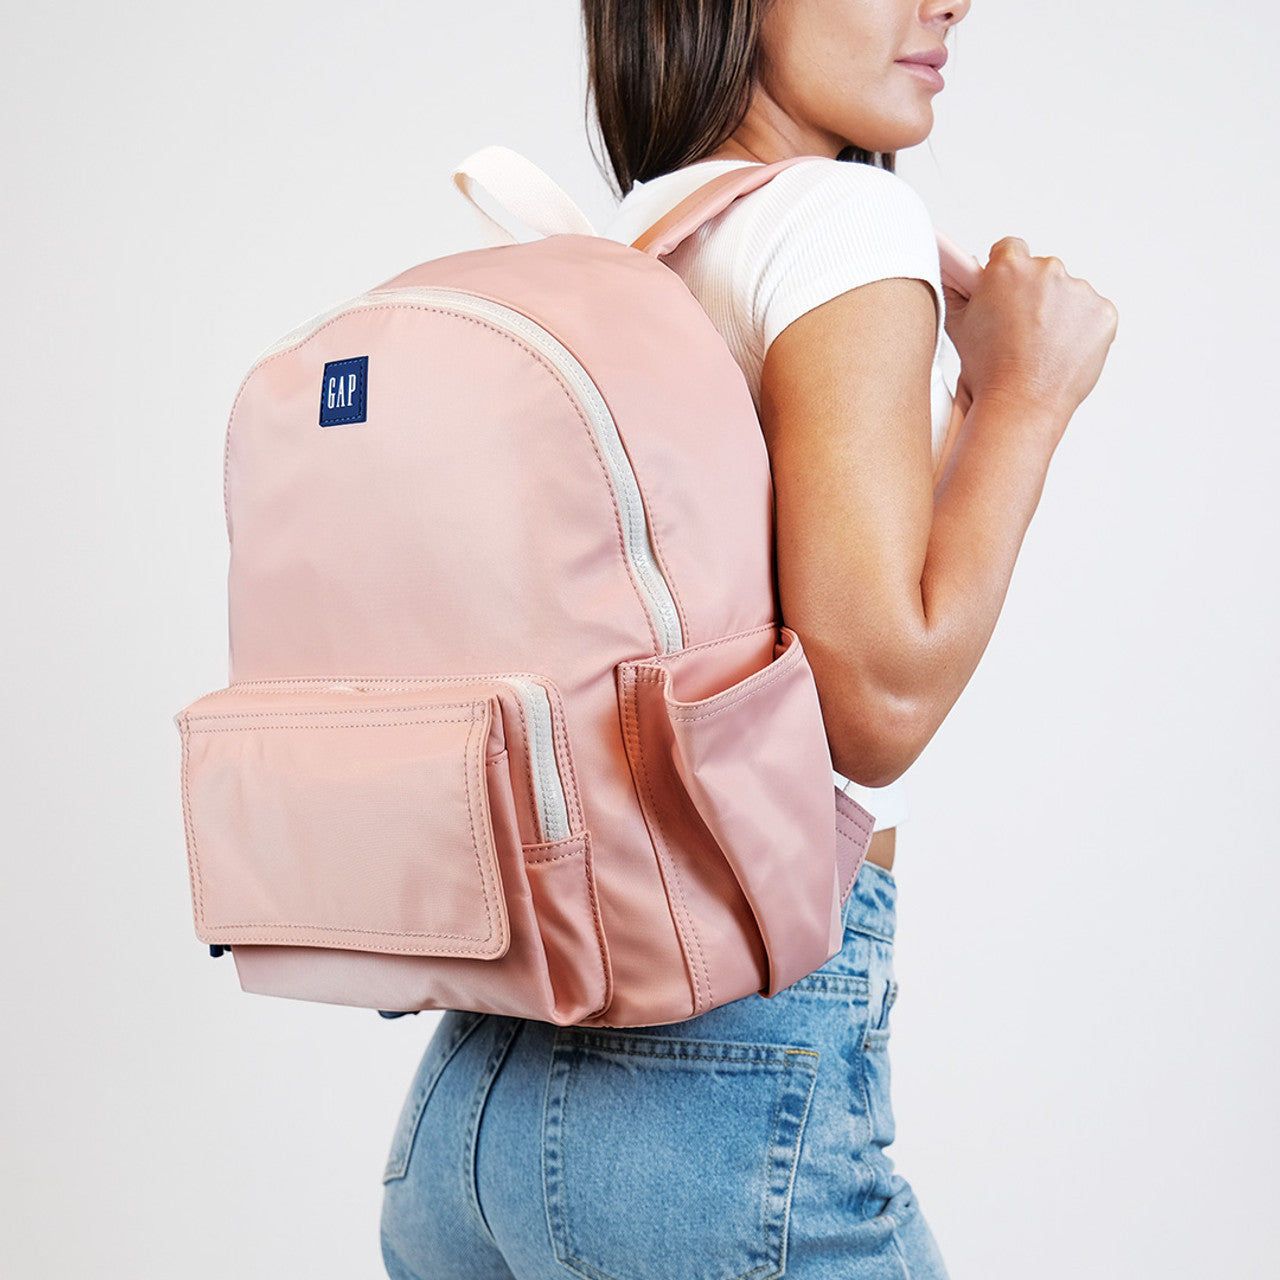 GAP - 11 Nylon Backpack front pocket - Blush-2